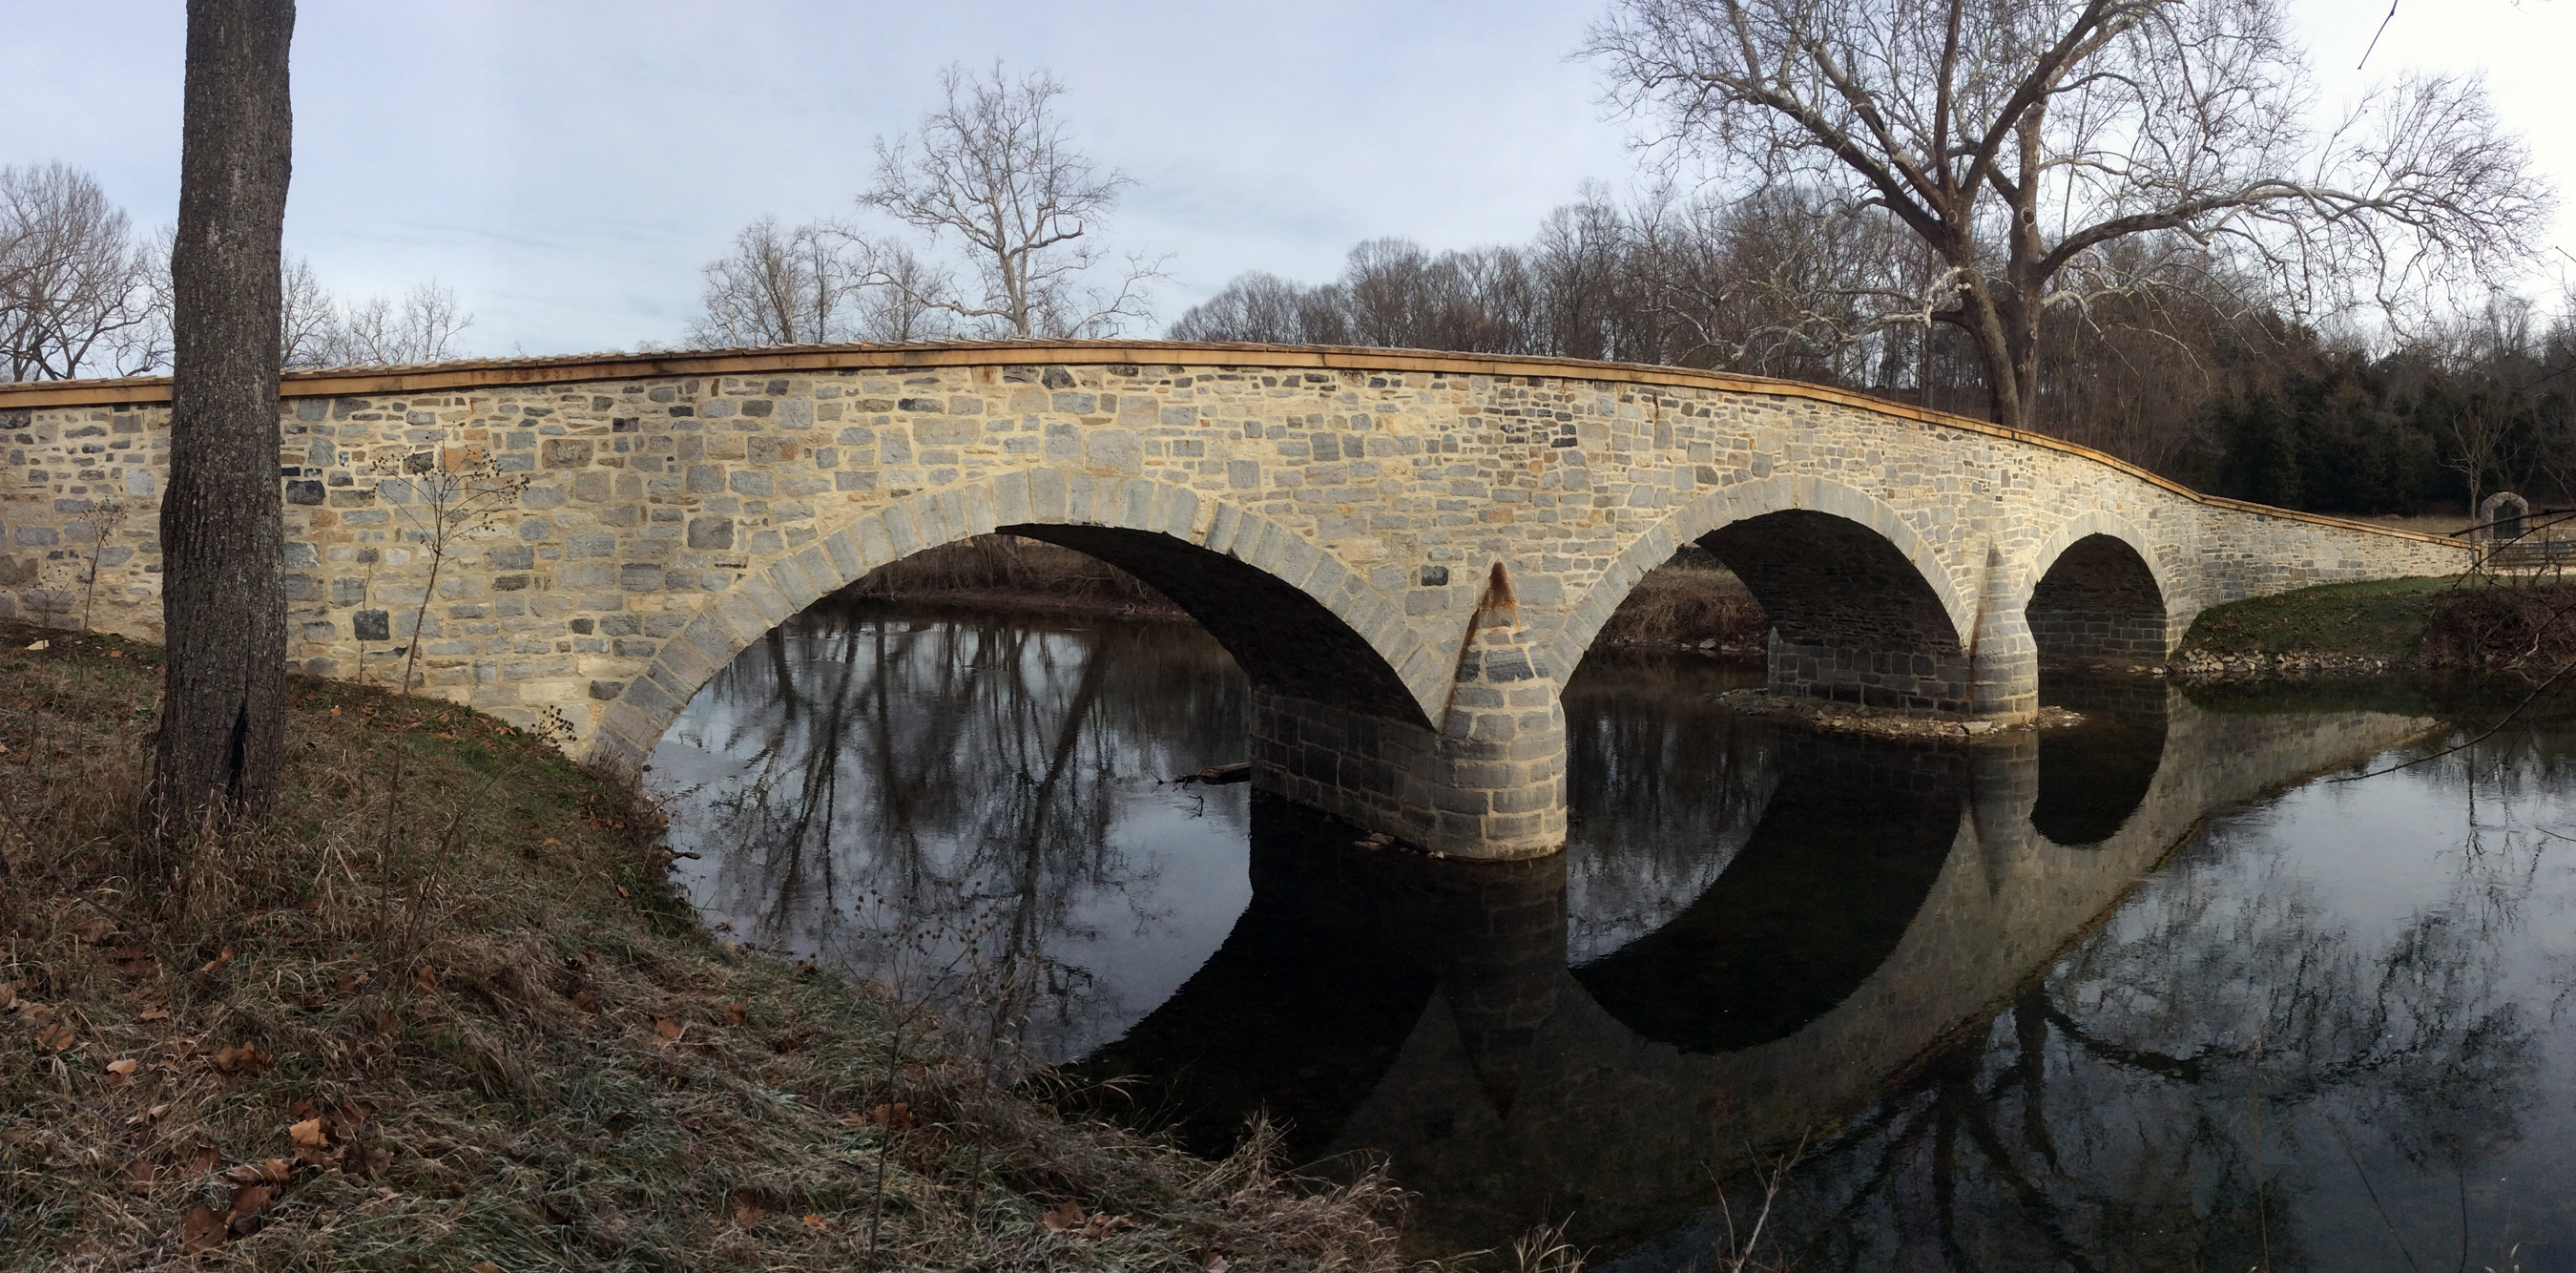 Photograph of the historic Burnside Bridge